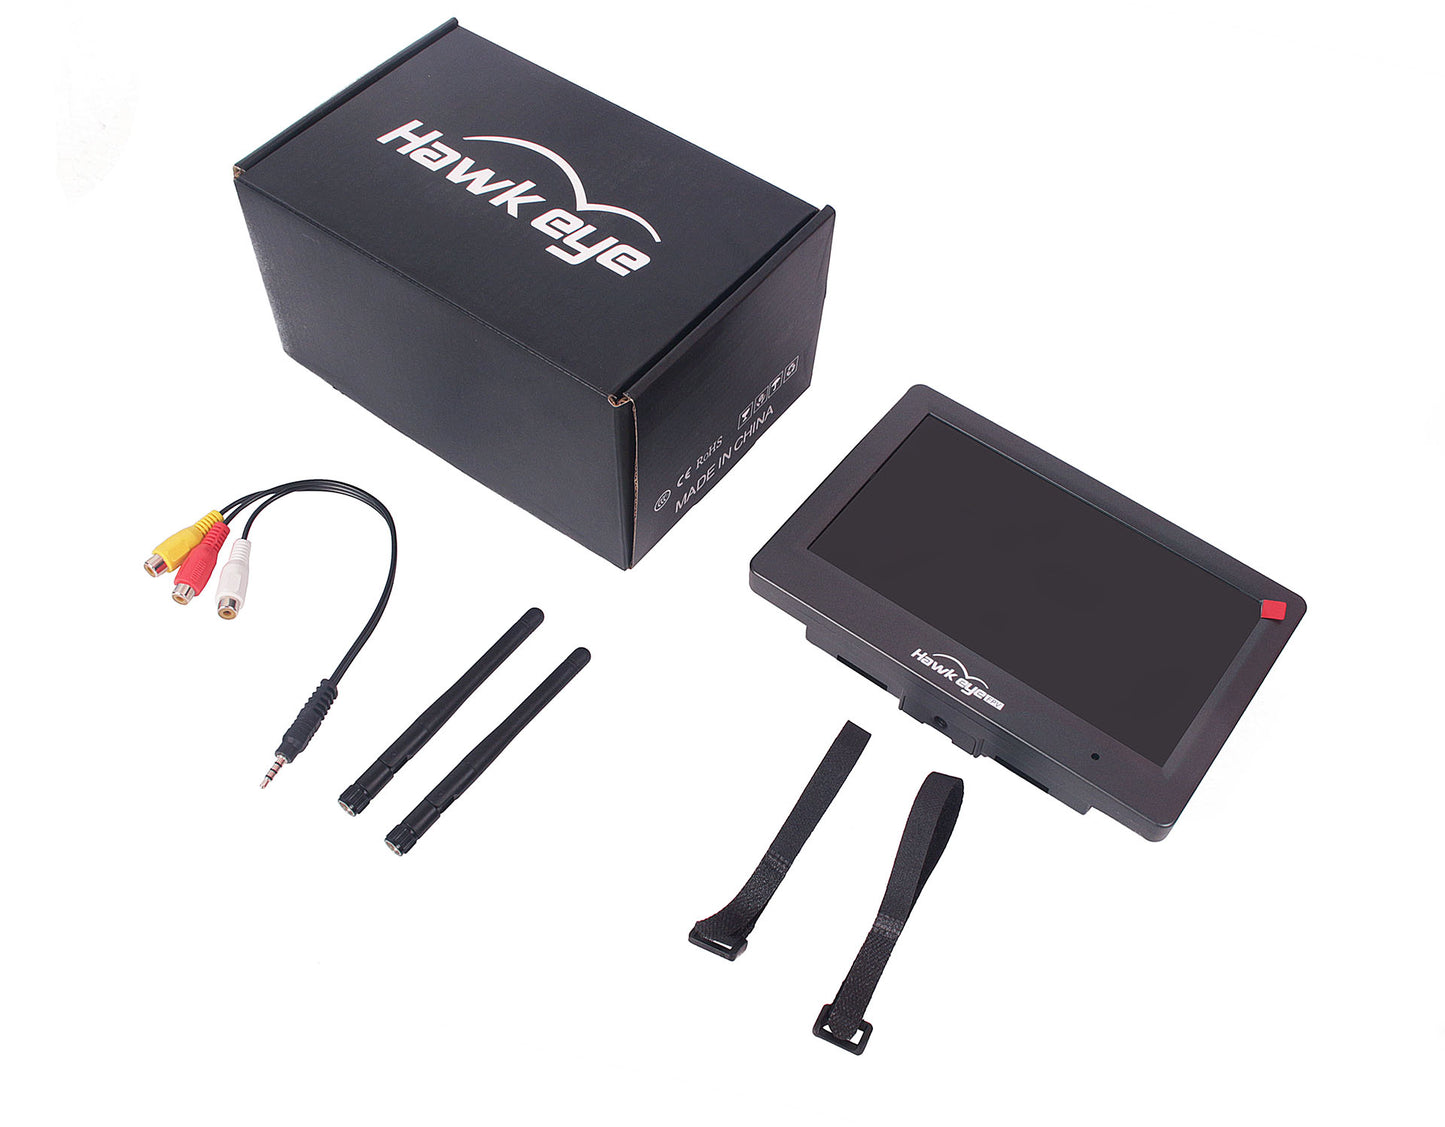 Hawkeye Litle Pilot Sharp VisionⅡ 7 inch 1000LUX FPV Monitor, DVR, HDMI